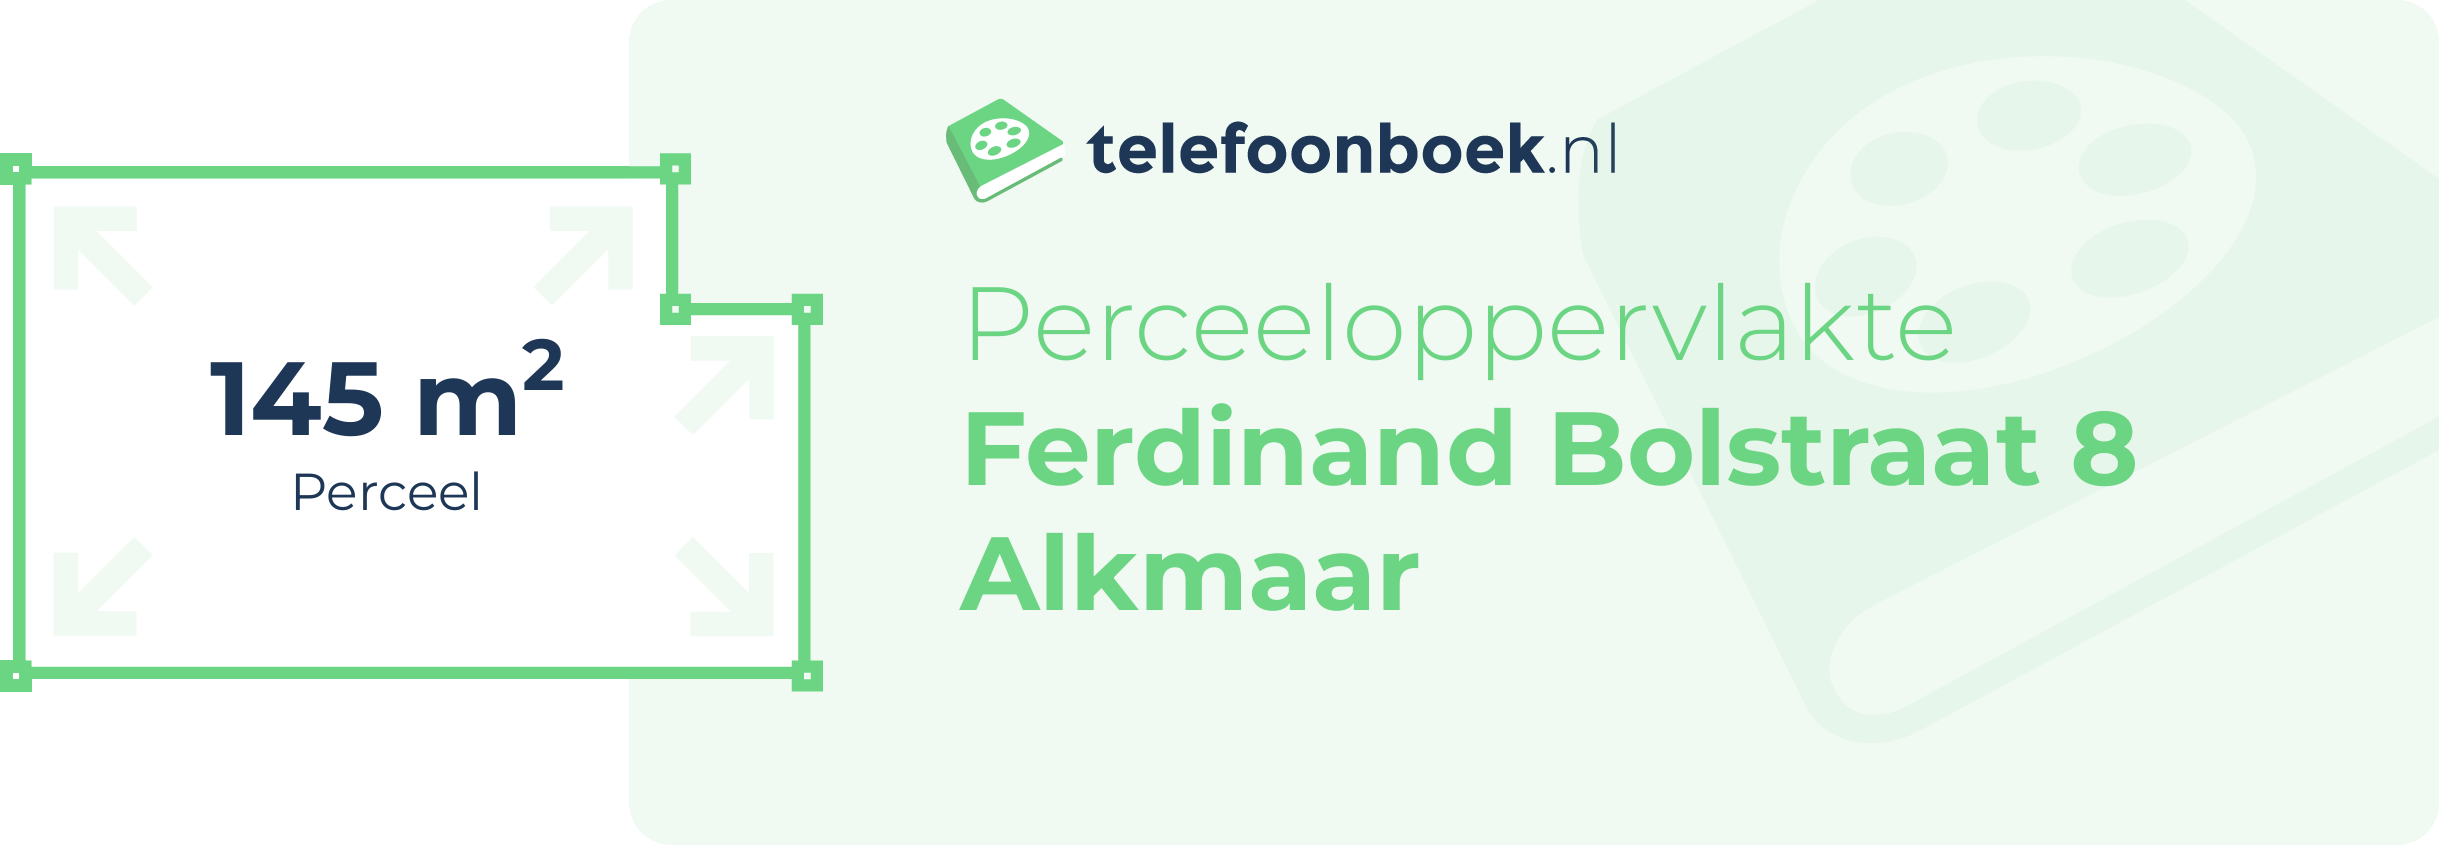 Perceeloppervlakte Ferdinand Bolstraat 8 Alkmaar